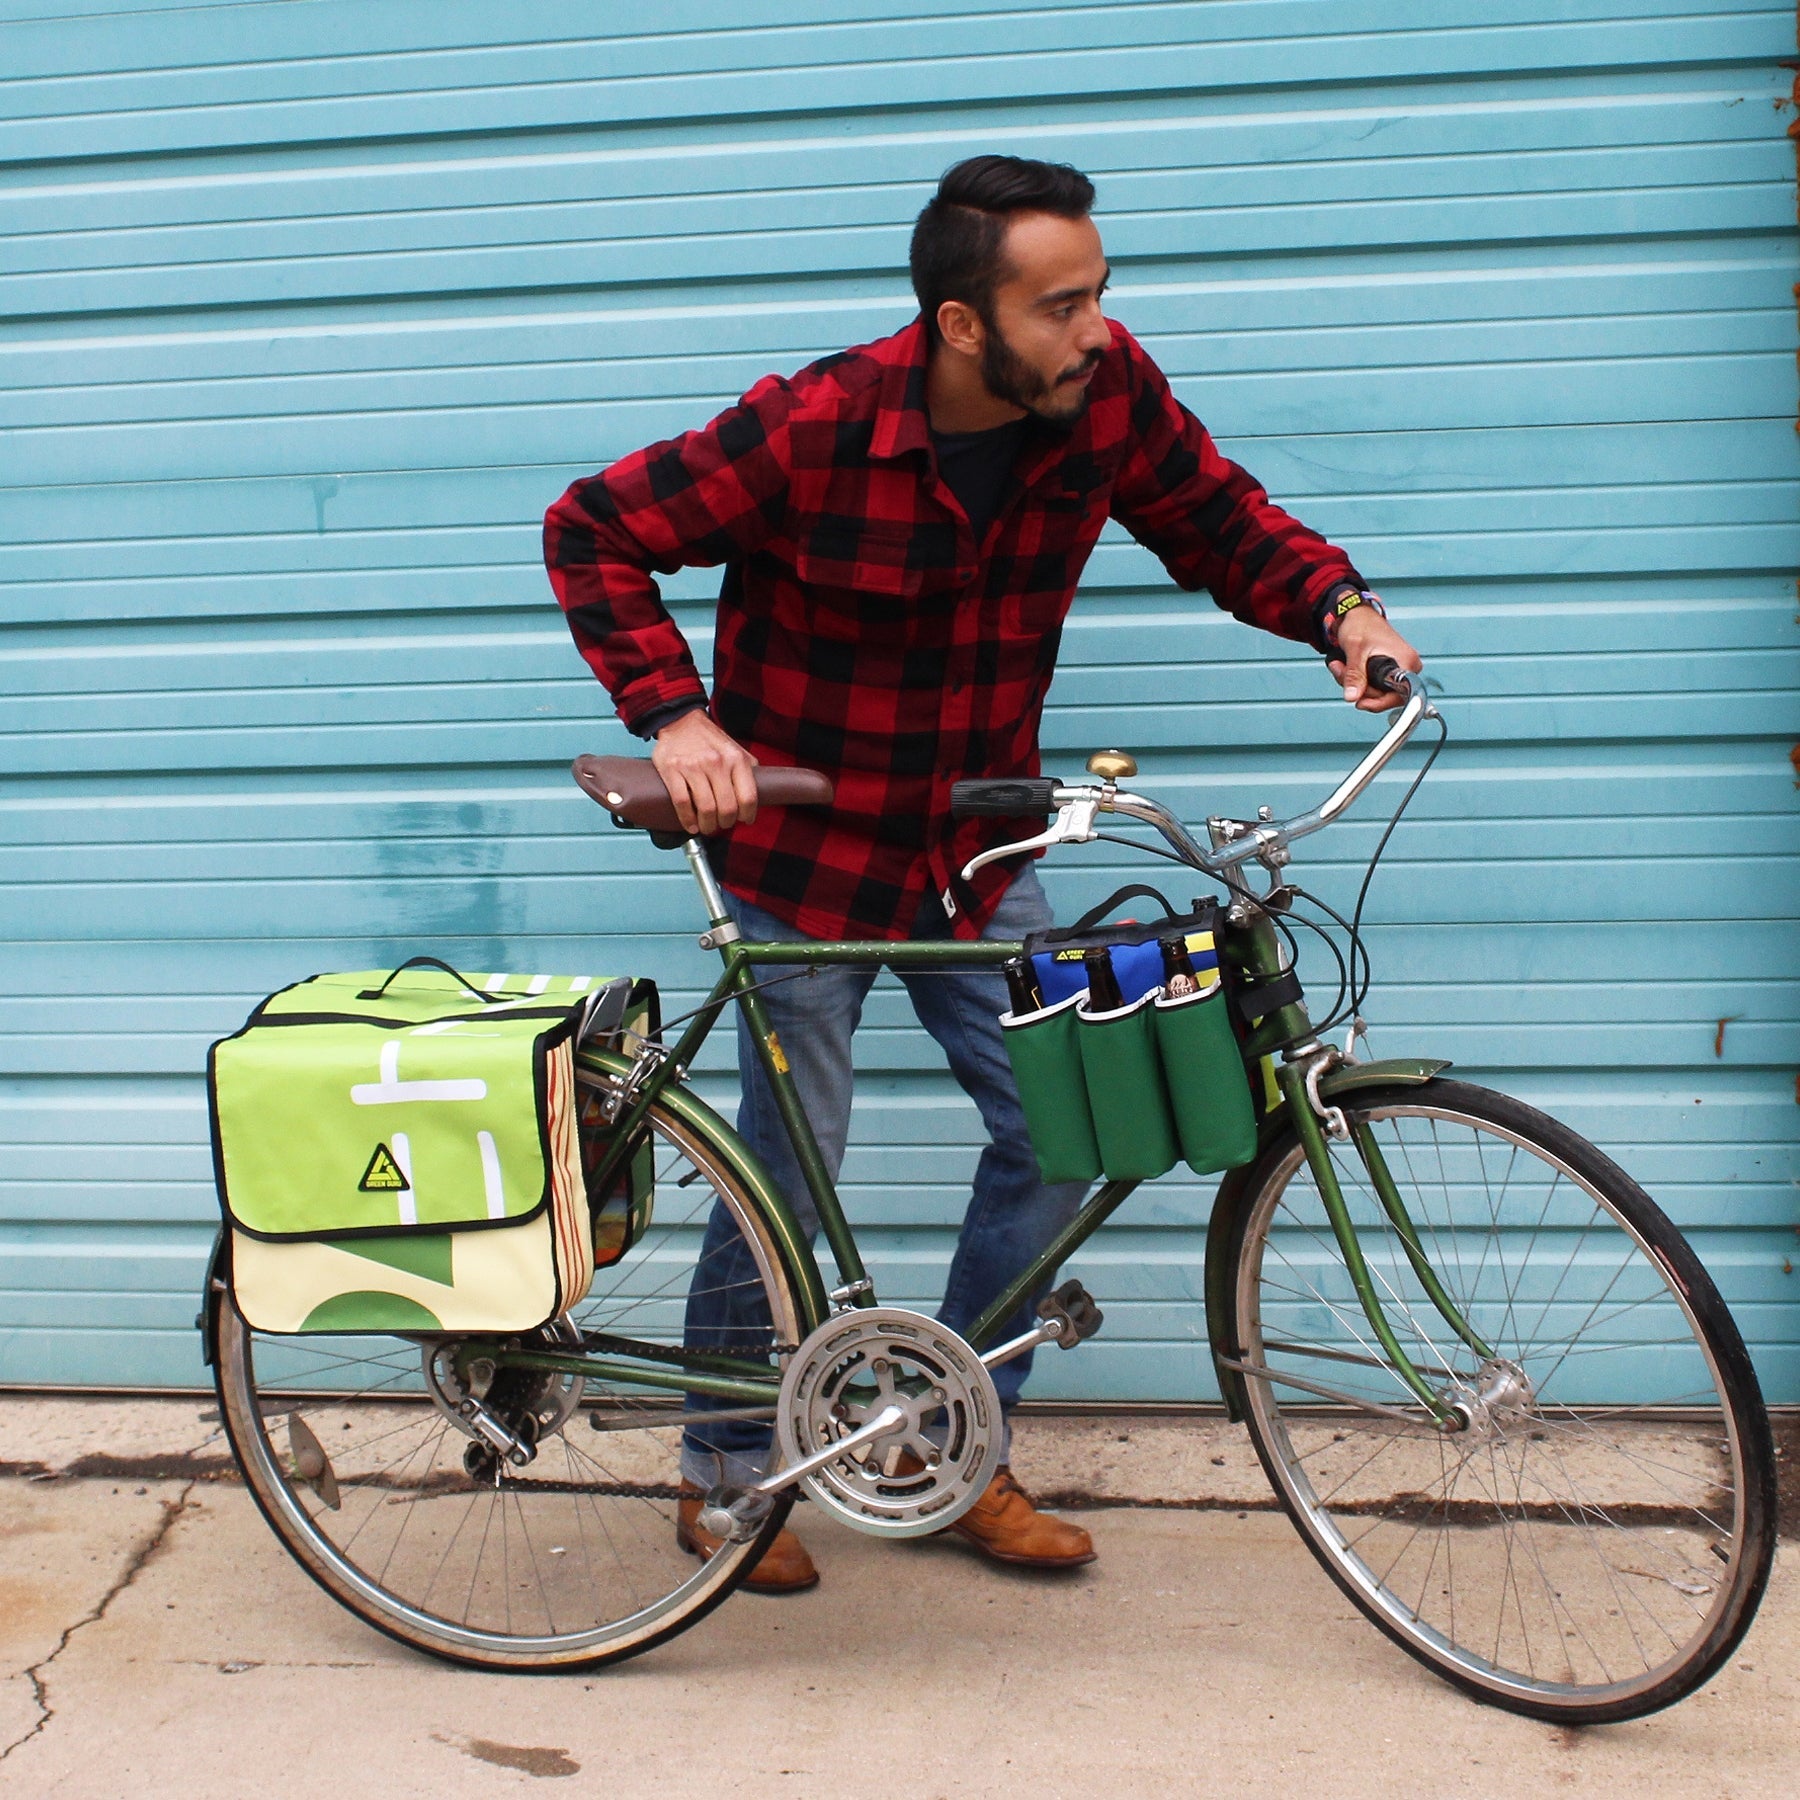 Green Guru | Double Dutch Pannier, Bike Accessories, Green Guru, Defiance Outdoor Gear Co.